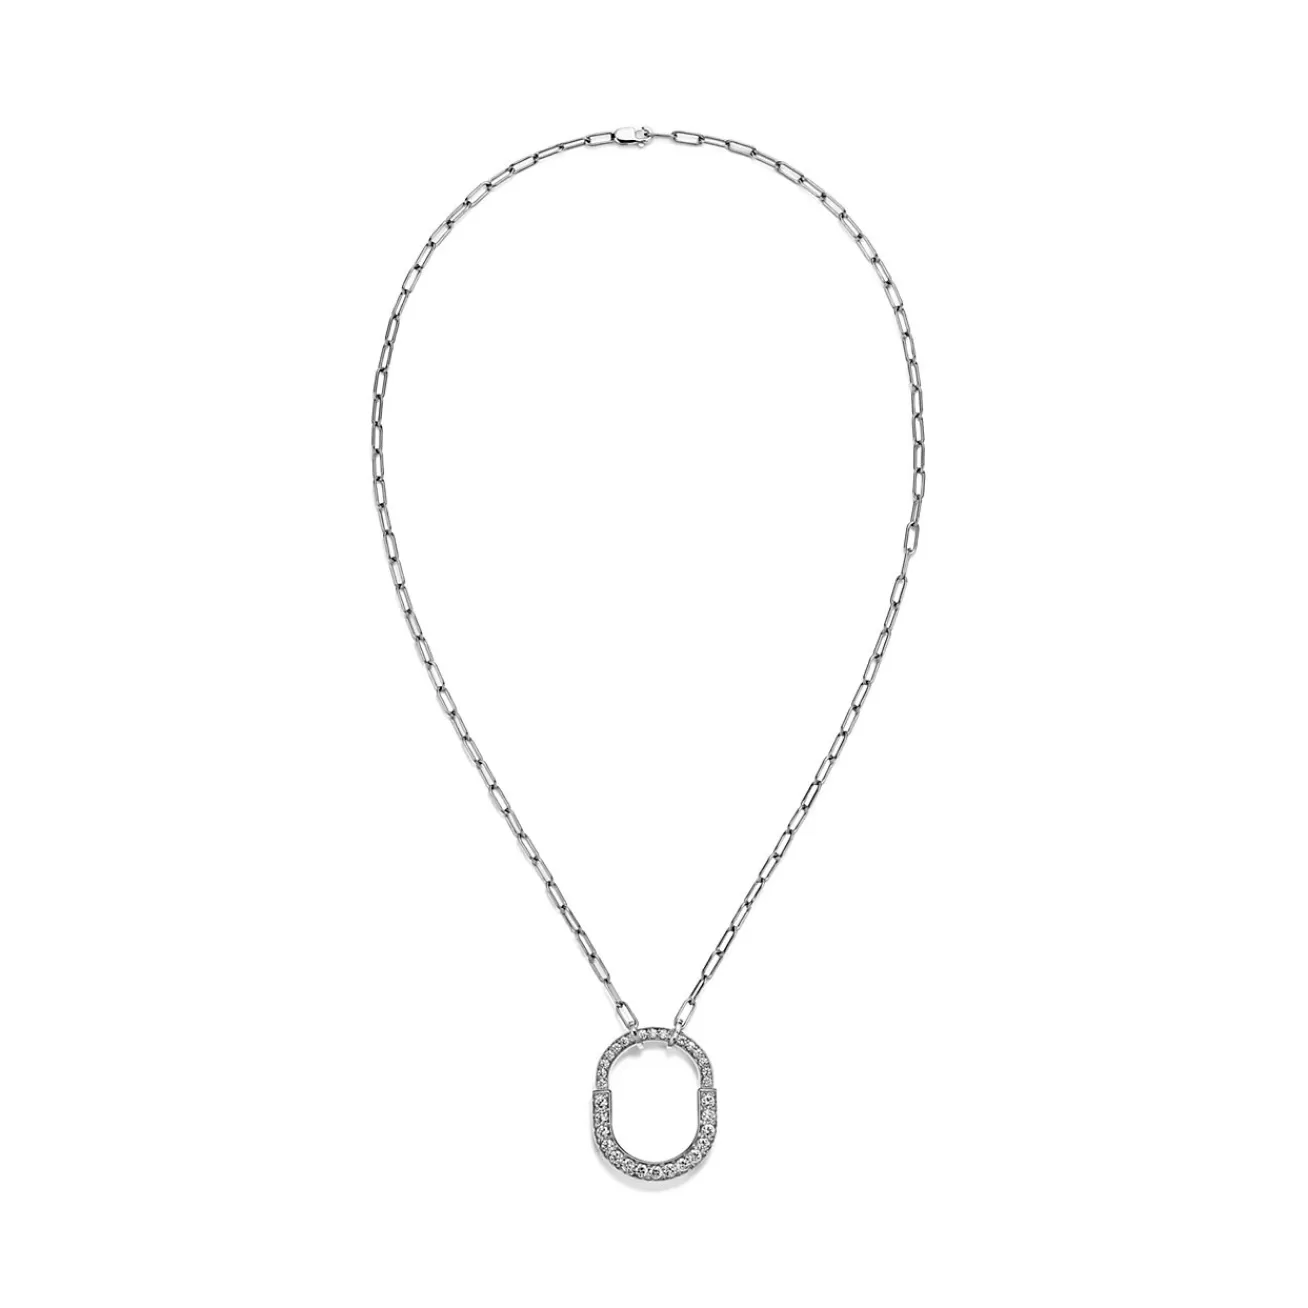 Tiffany & Co. Tiffany Lock Pendant in White Gold with Pavé Diamonds, Medium | ^ Necklaces & Pendants | Diamond Jewelry